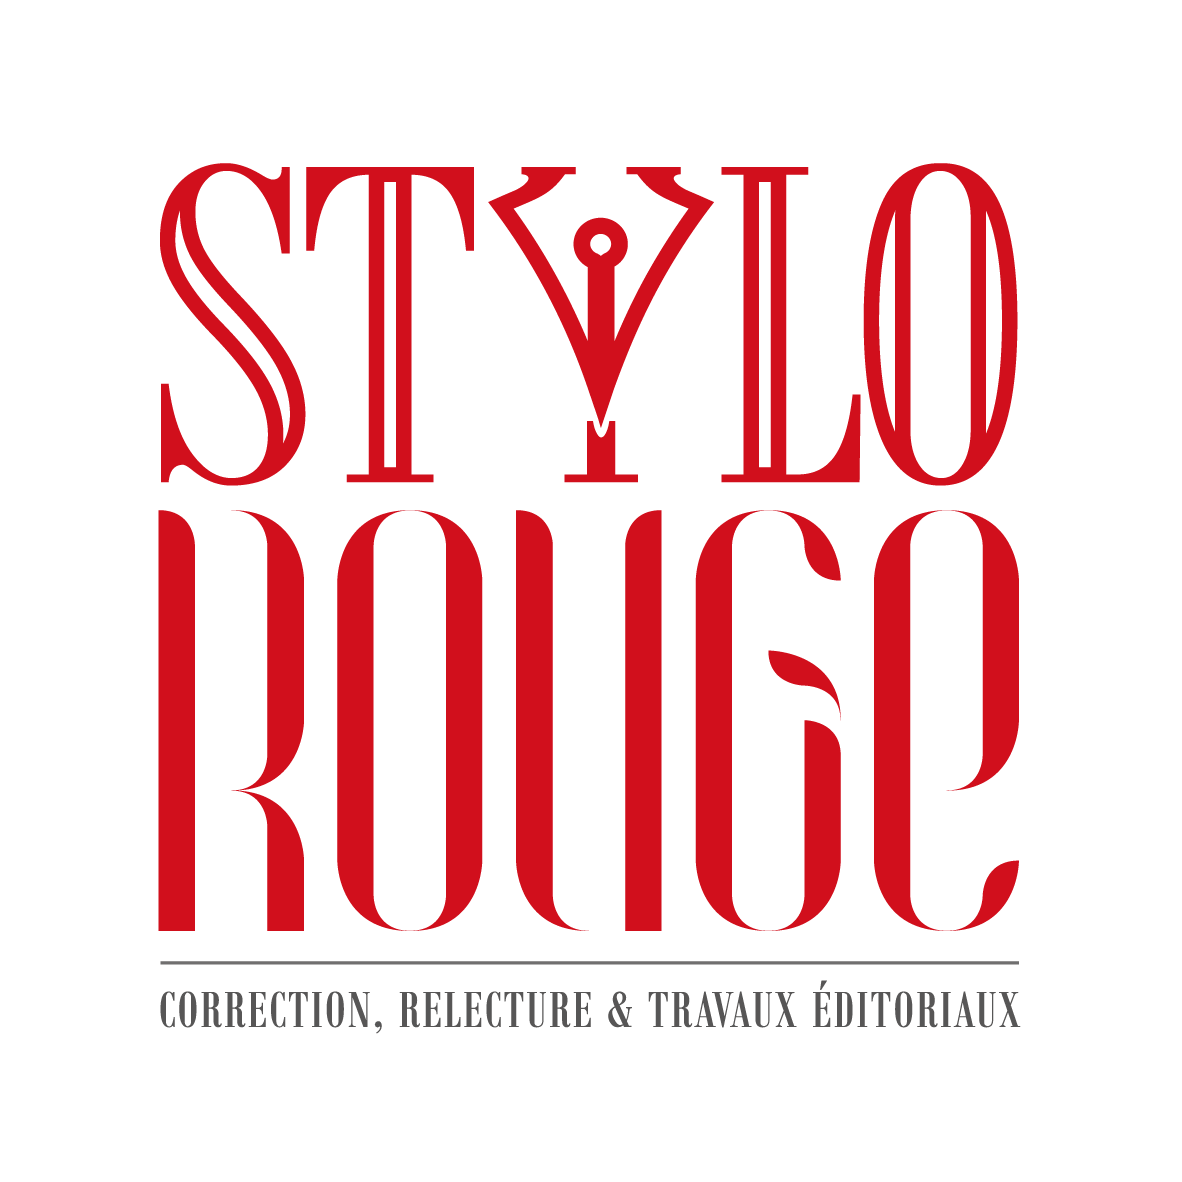 Stylo Rouge